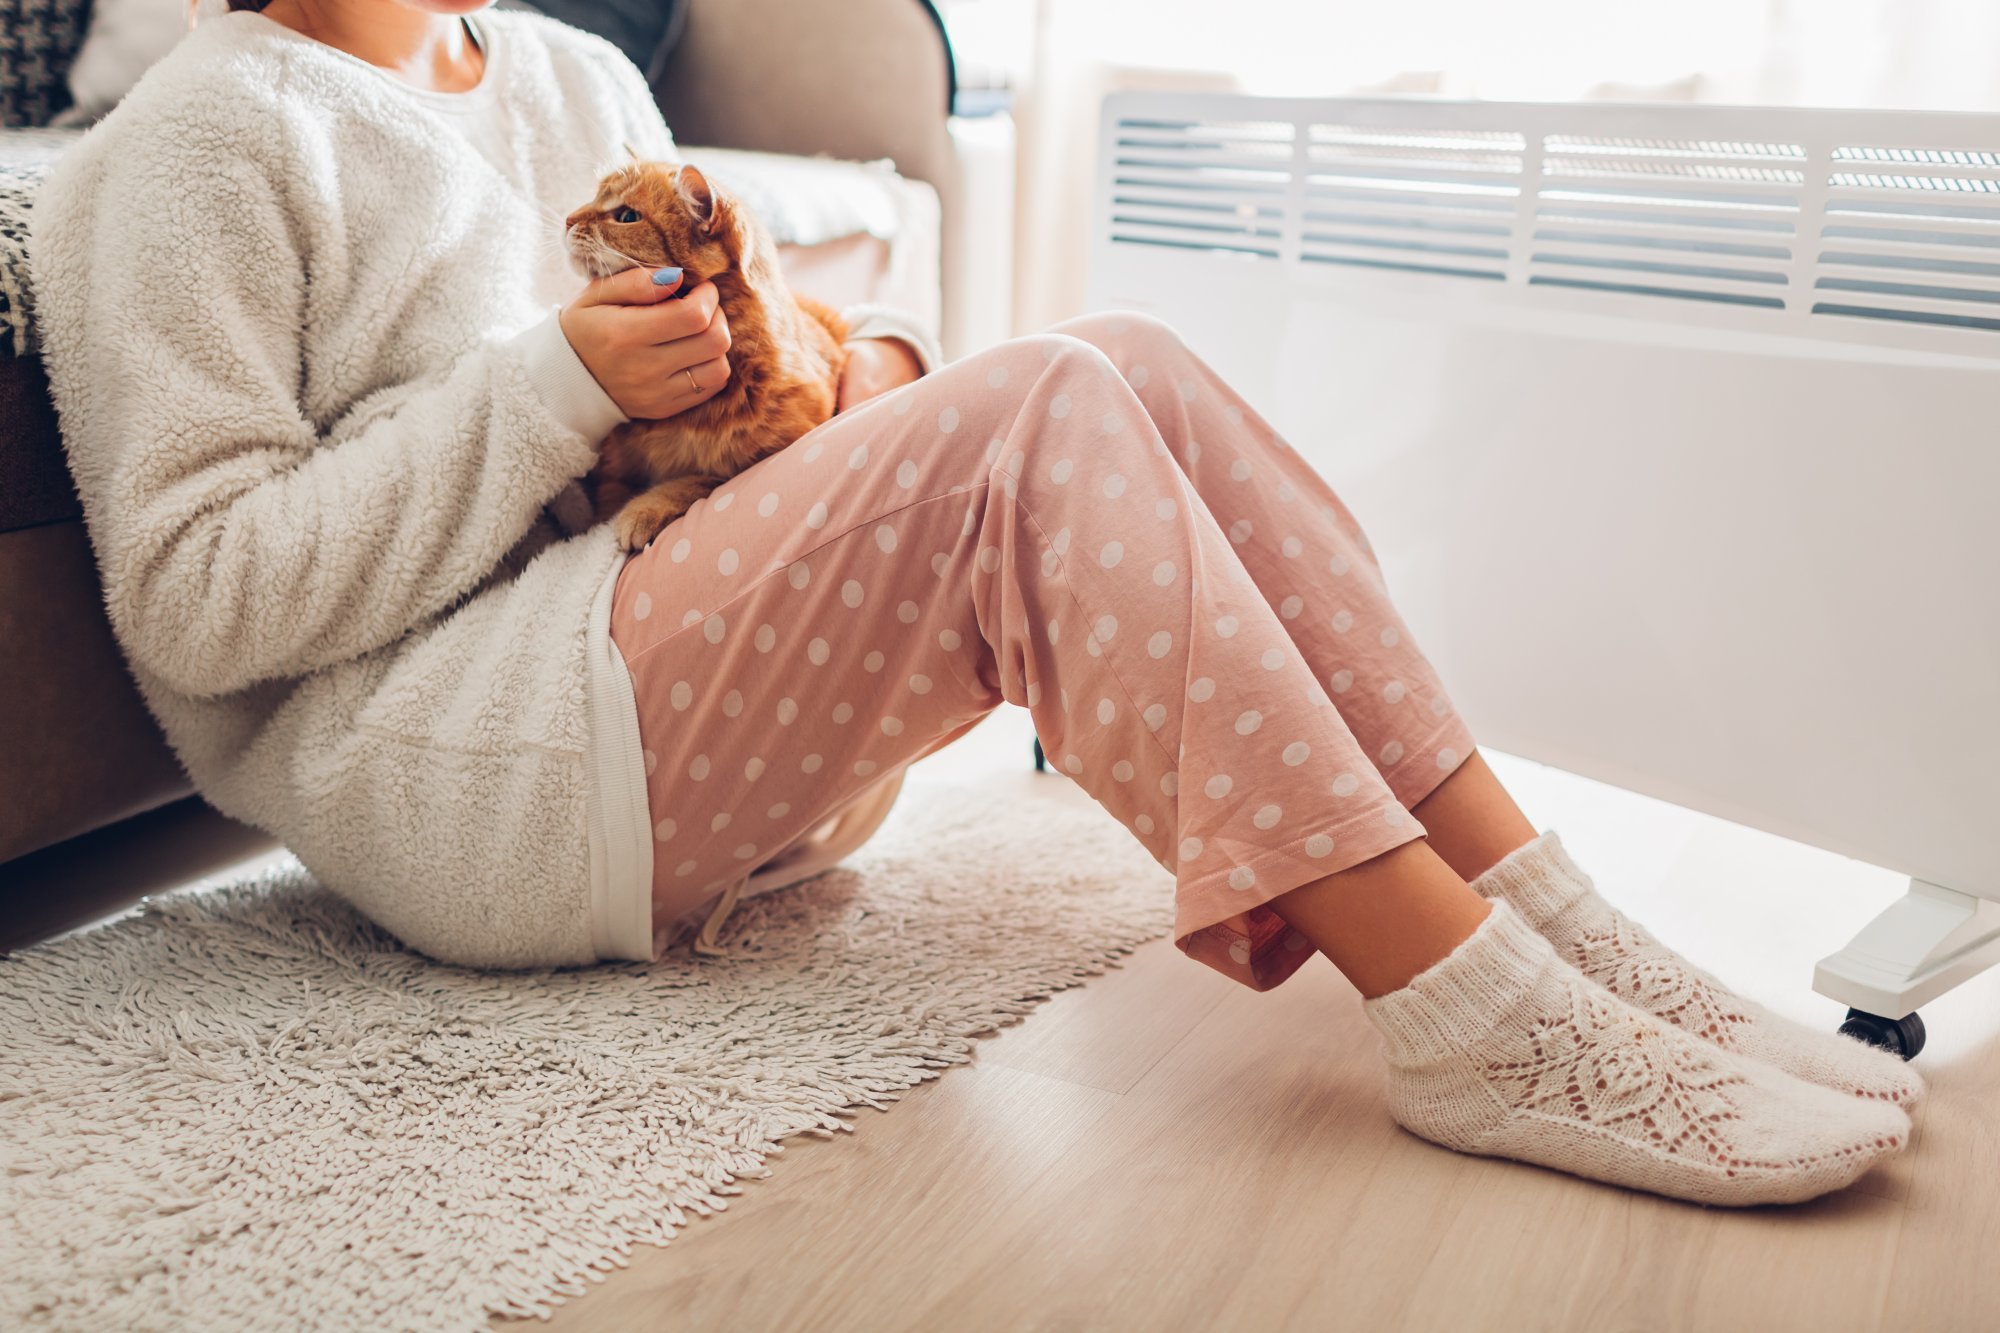 using-heater-home-winter-woman-warming-body-with-cat-heating-season.jpg